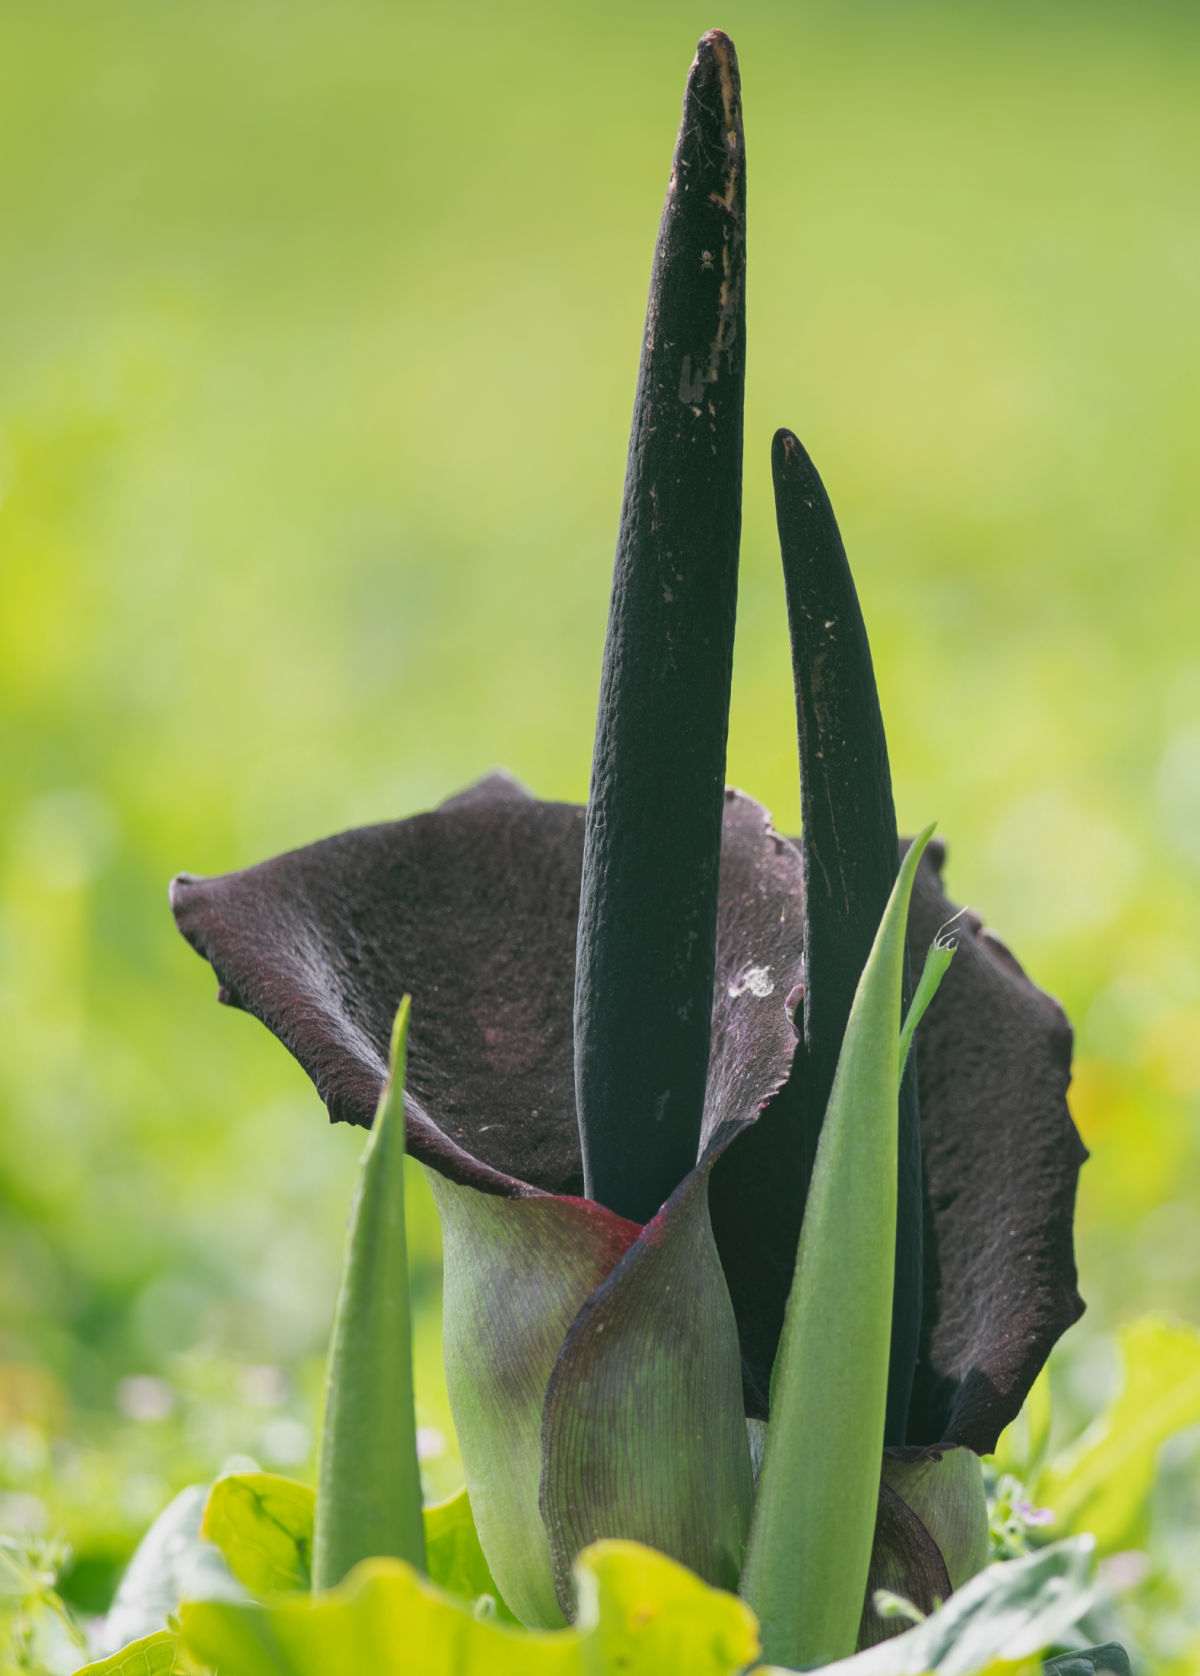 Bloom of black calla lily.